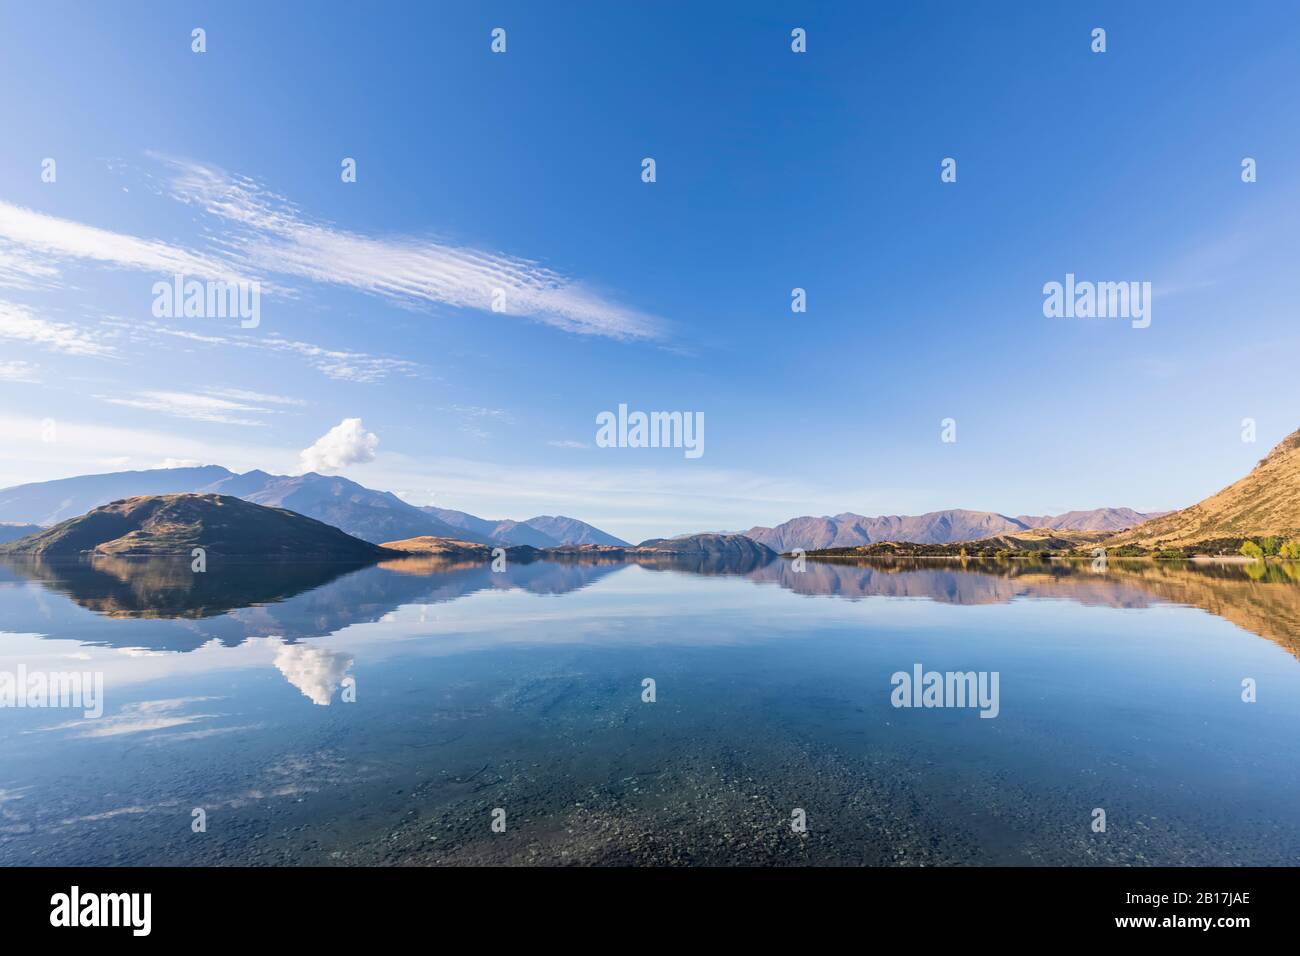 New Zealand, Queenstown-Lakes District, Wanaka, Hills reflecting in Lake Wanaka Stock Photo